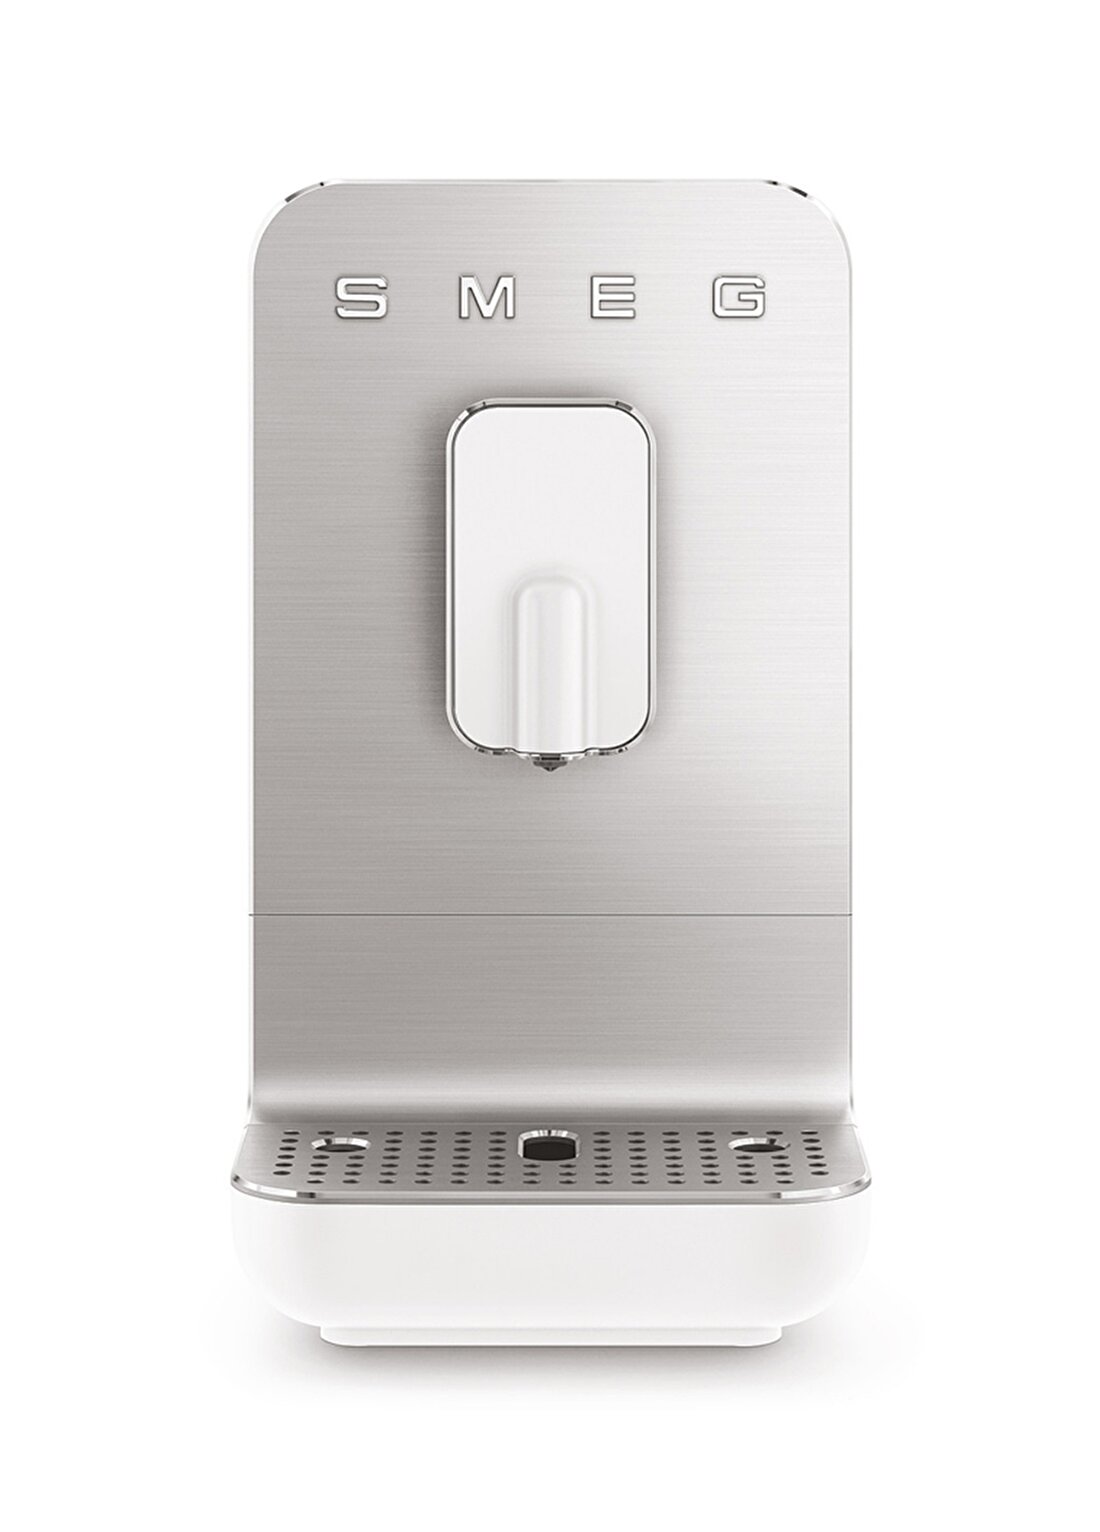 SMEG 50'S Style BCC01 Espresso Otomatikkahve Makinesi Mat Beyaz